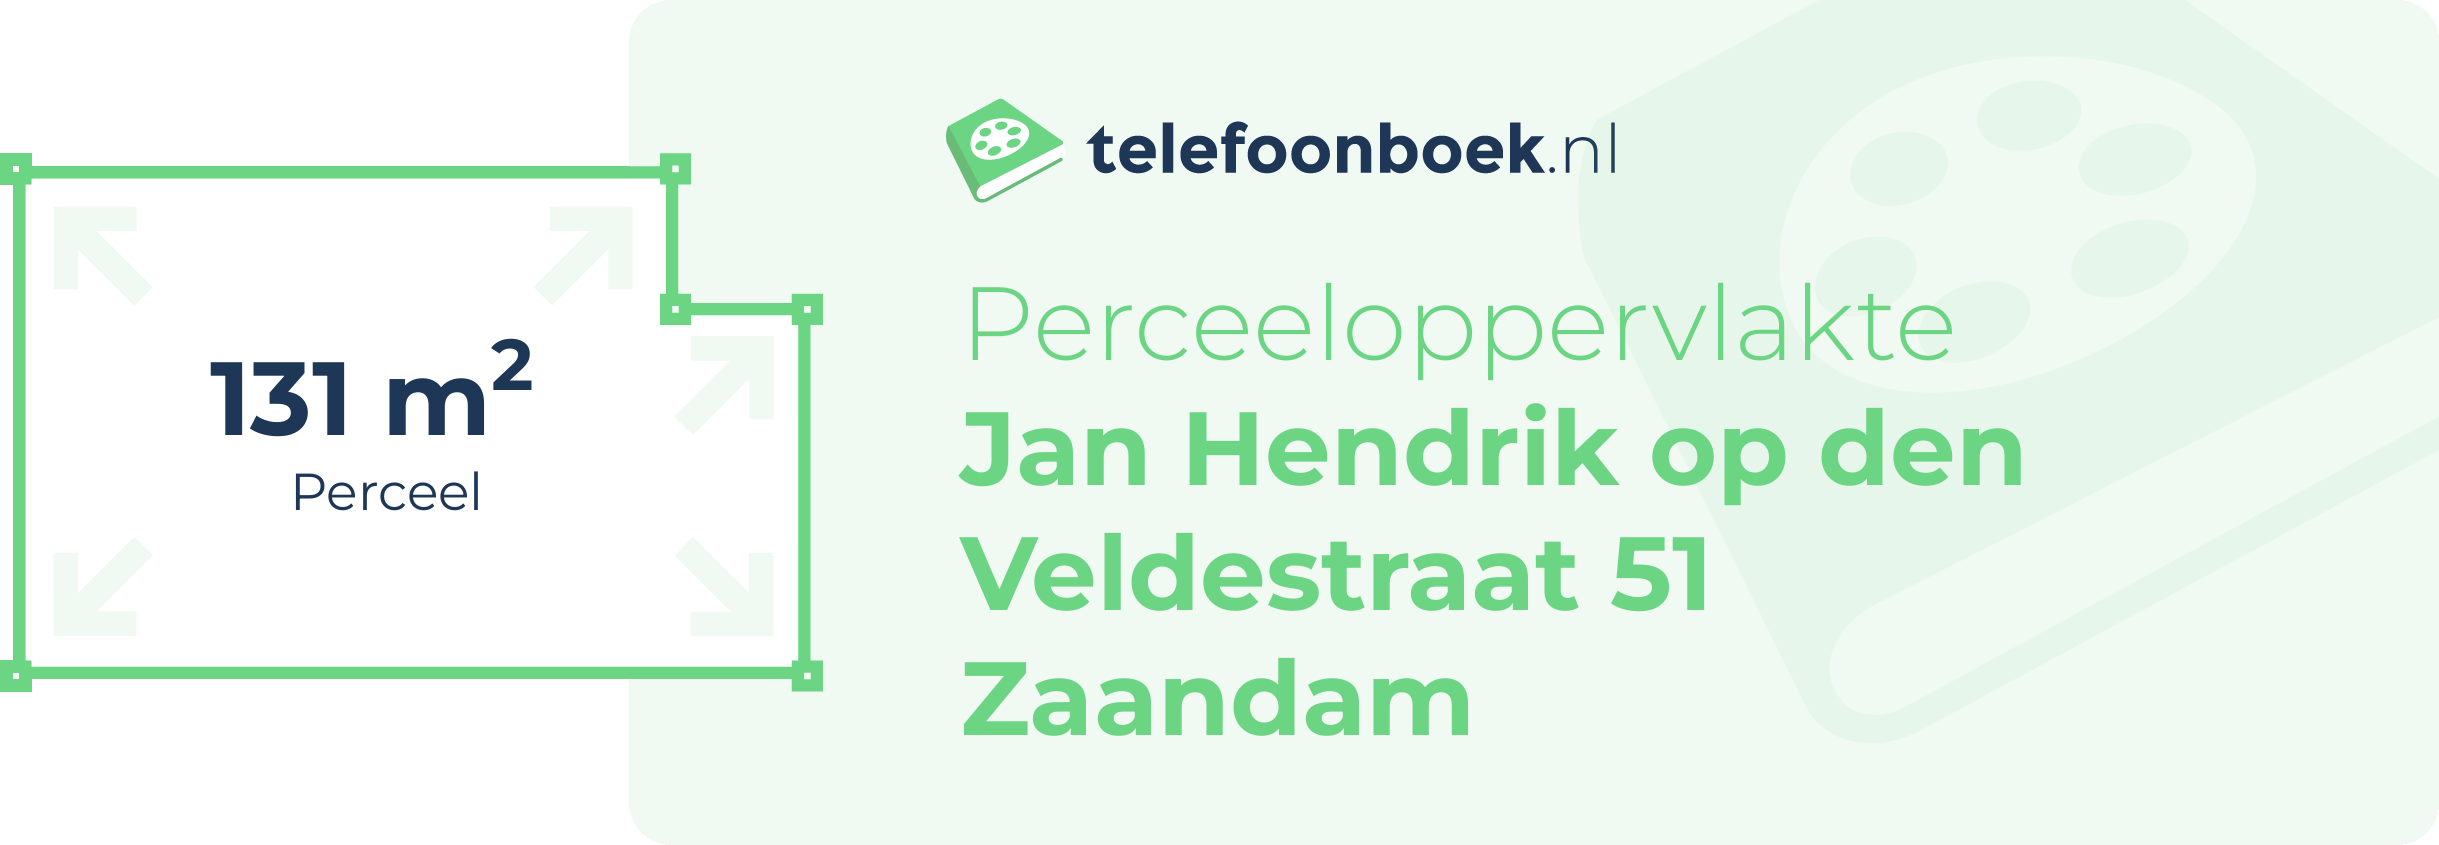 Perceeloppervlakte Jan Hendrik Op Den Veldestraat 51 Zaandam